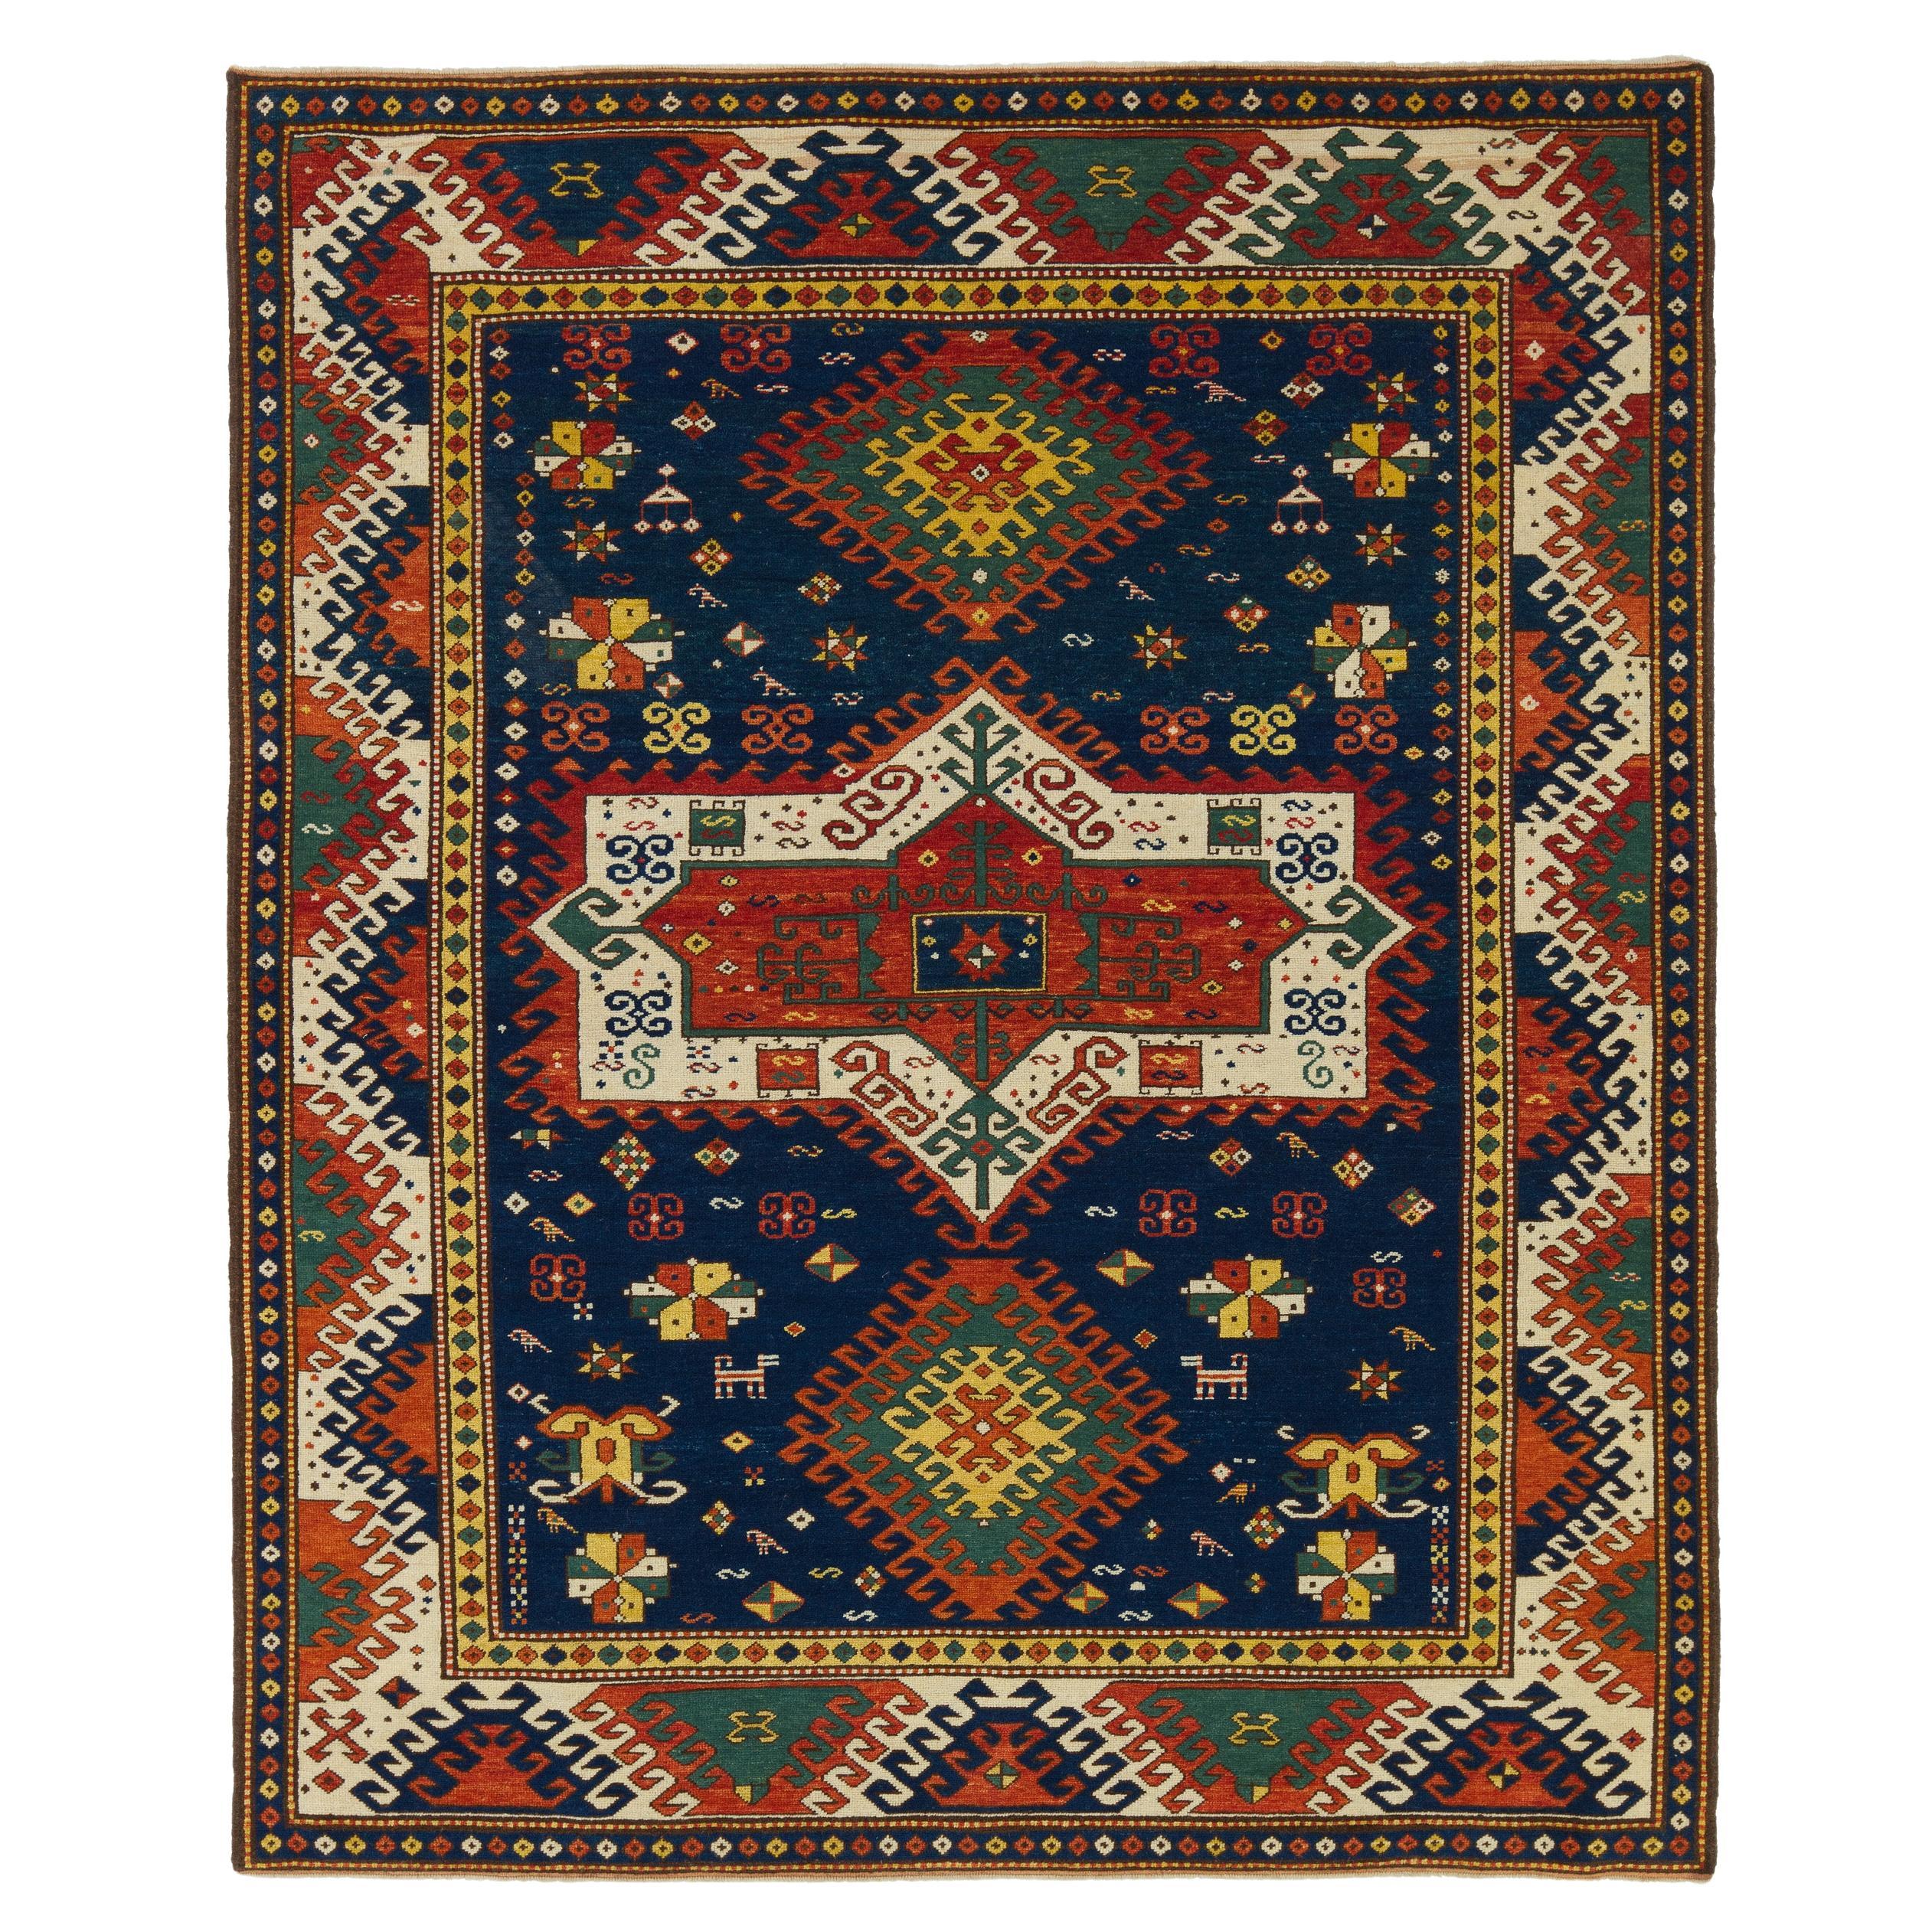 Ararat Rugs Fachralo Kazak Rug 19th Century Caucasus Revival Carpet Natural Dyed For Sale